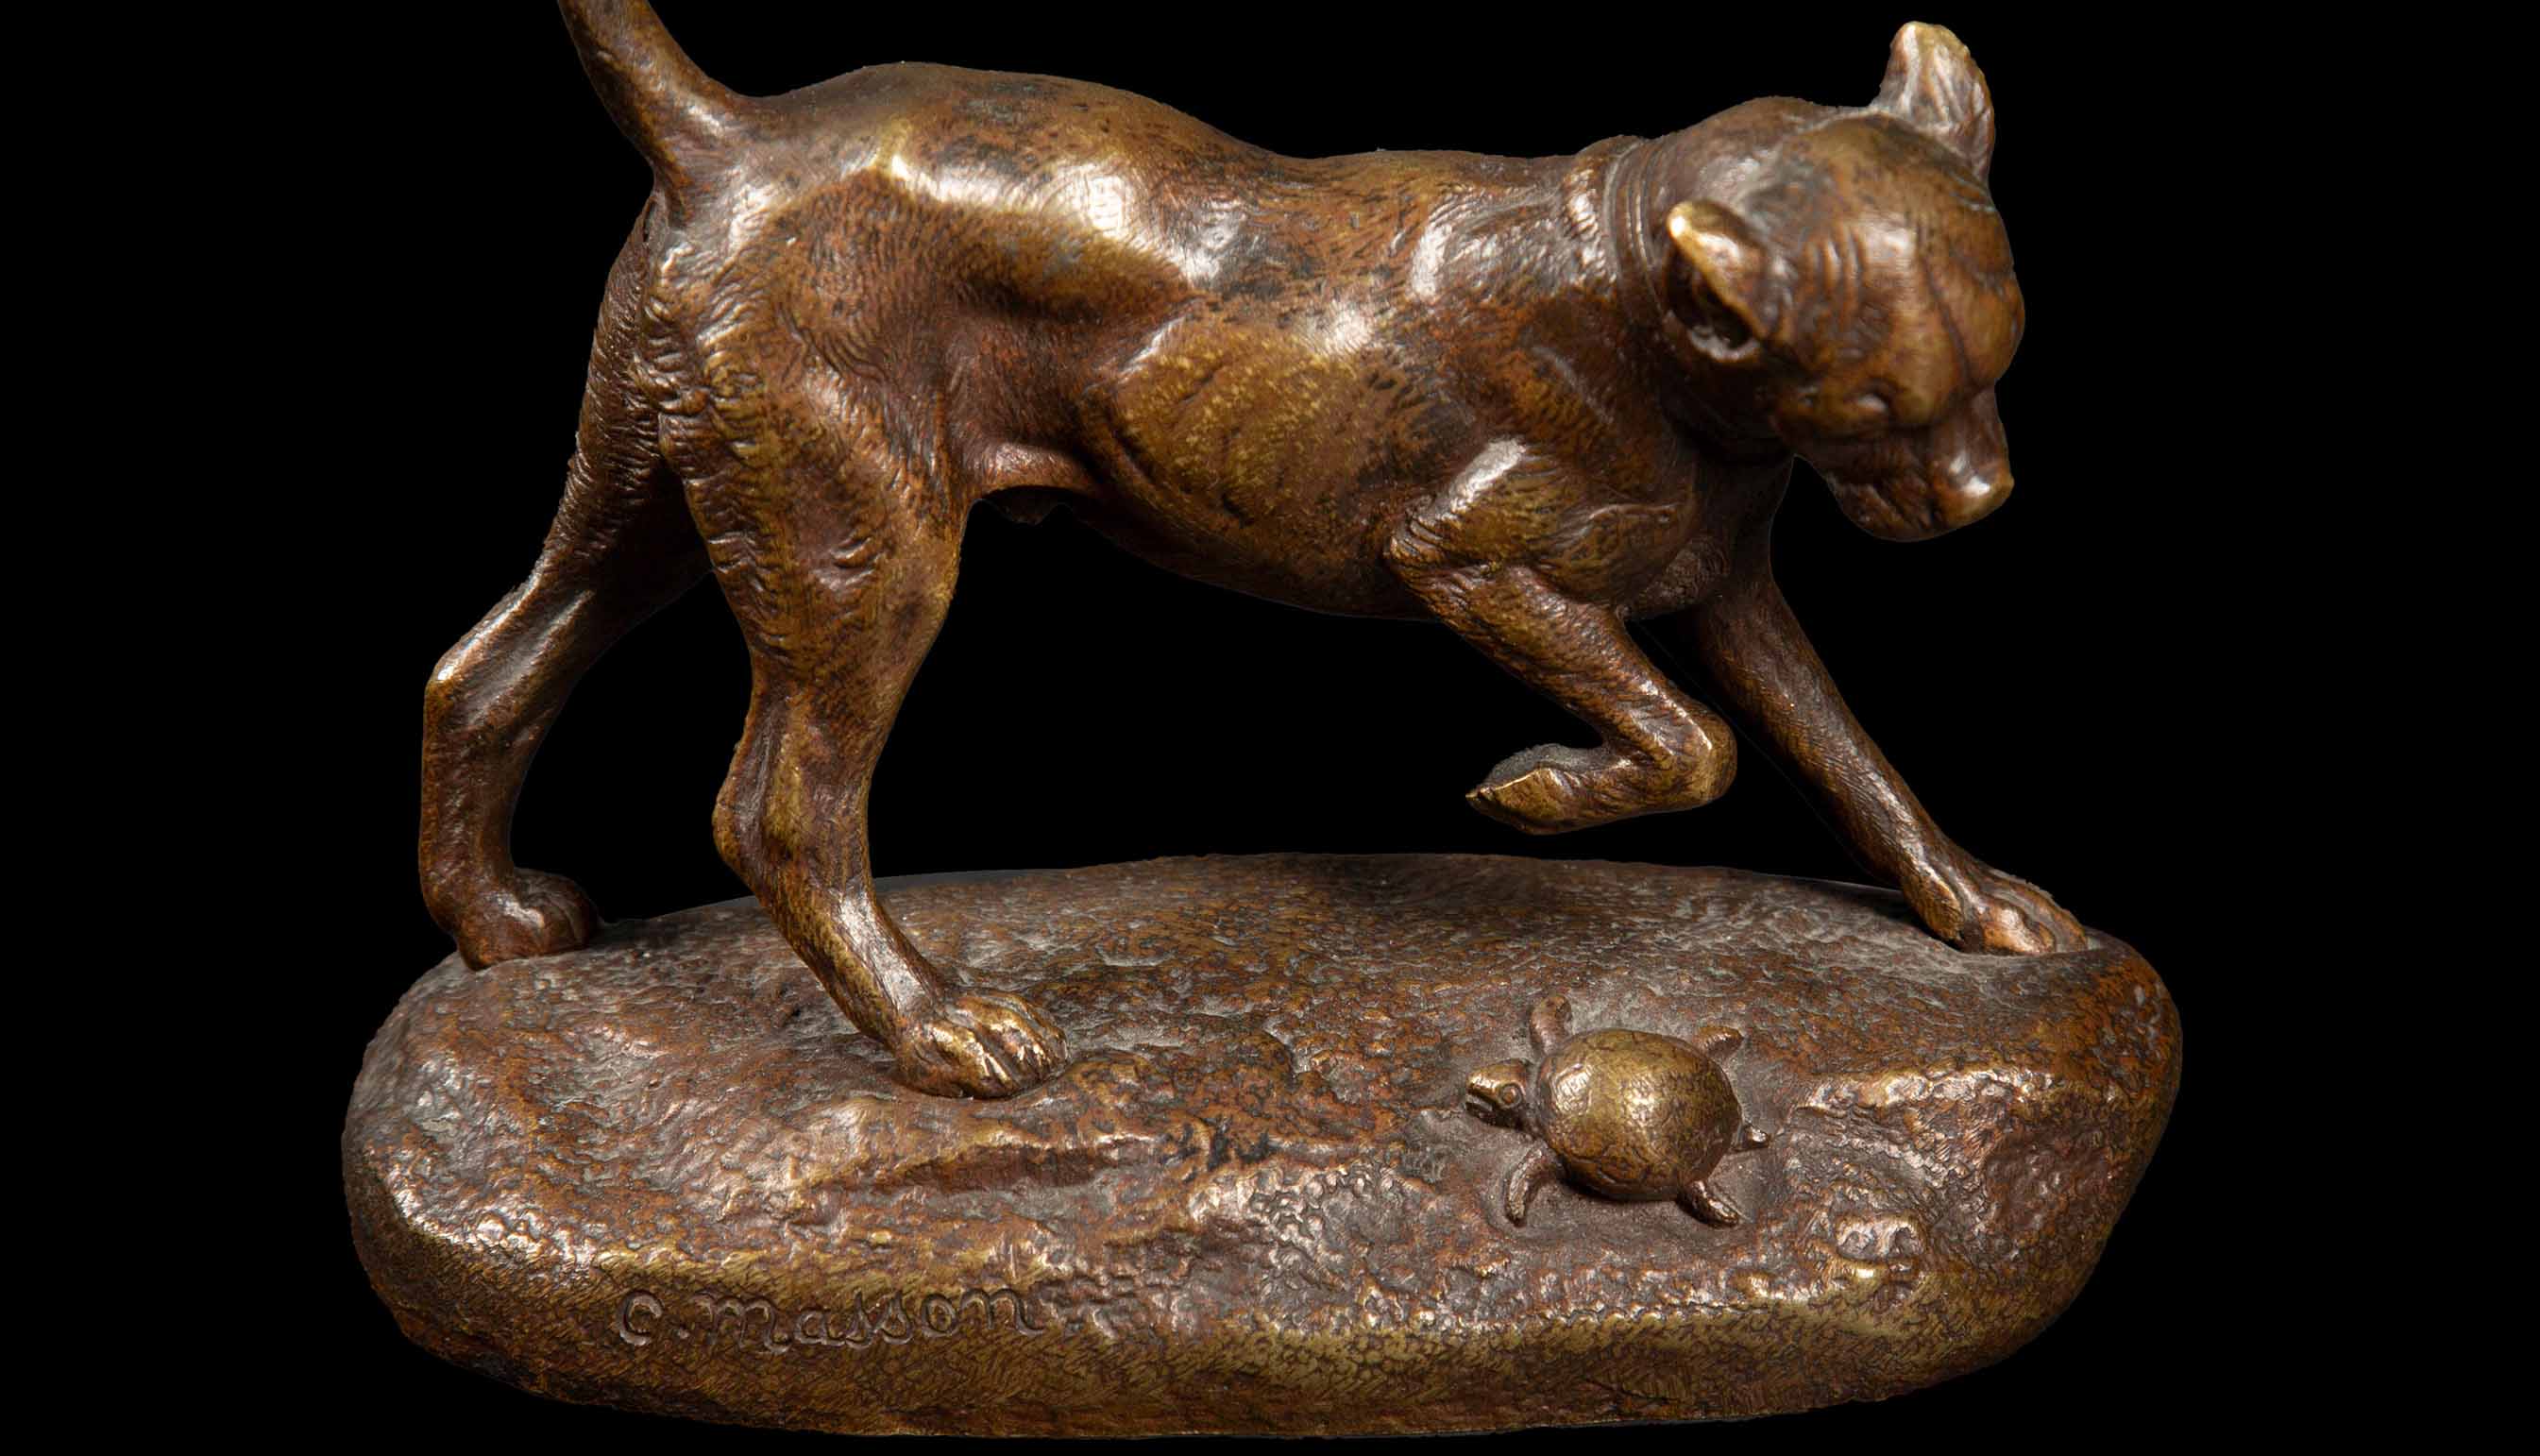 Late 19th Century Bronze Sculpture: Dog and Turtle Play by Clovis Edmond Masson